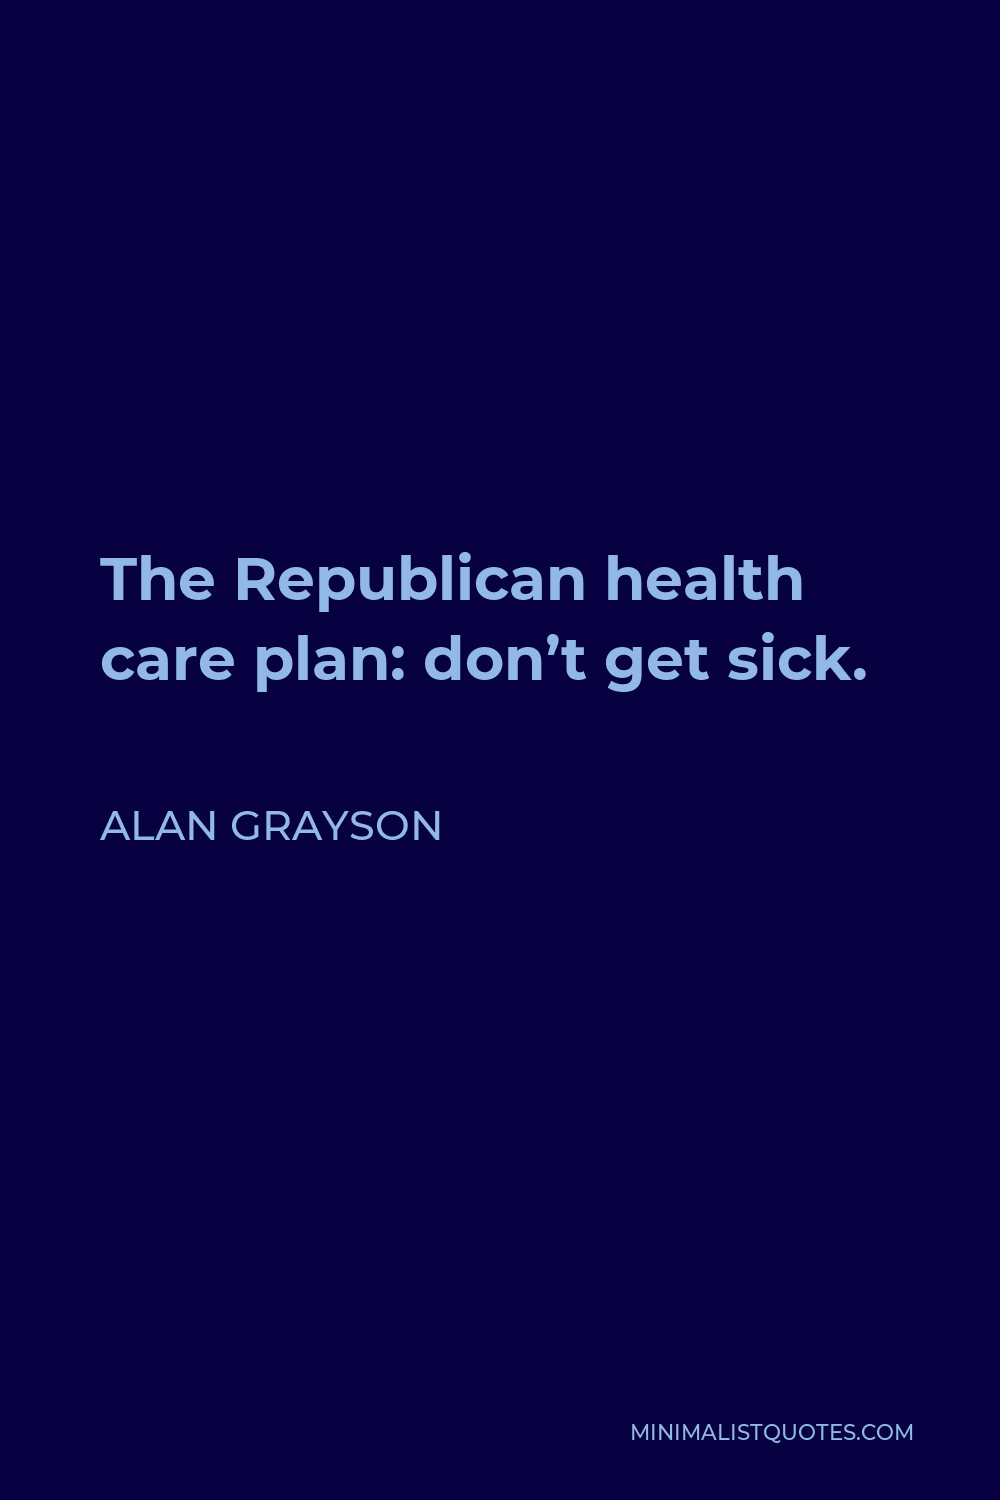 Alan Grayson Quote - The Republican health care plan: don’t get sick.